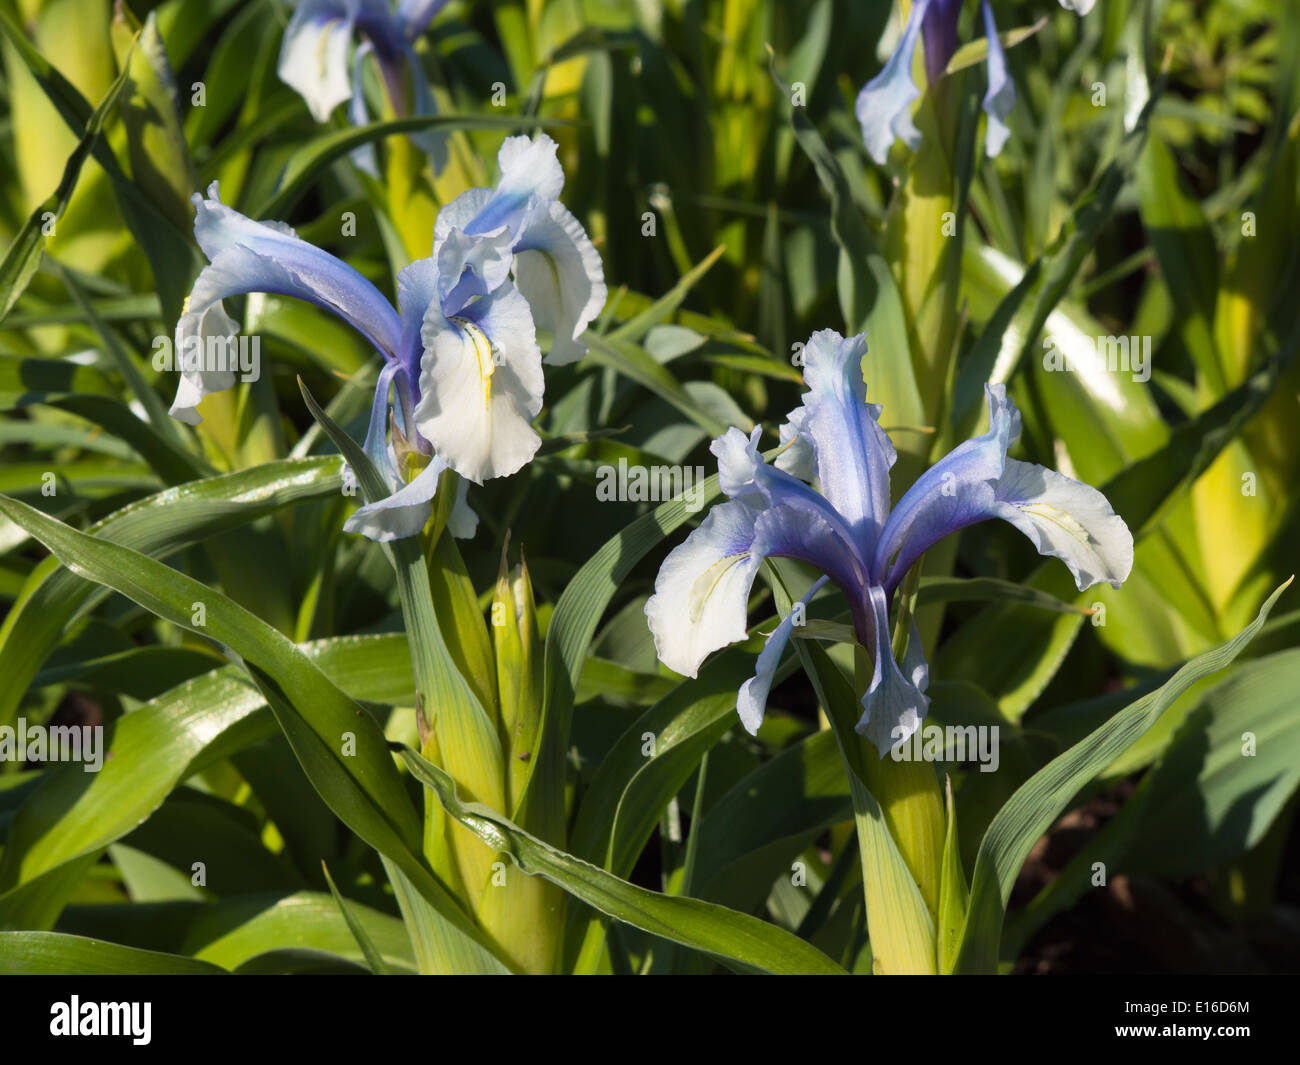 Iris aucheri light blue and white, from the botanical garden in Oslo Norway Stock Photo